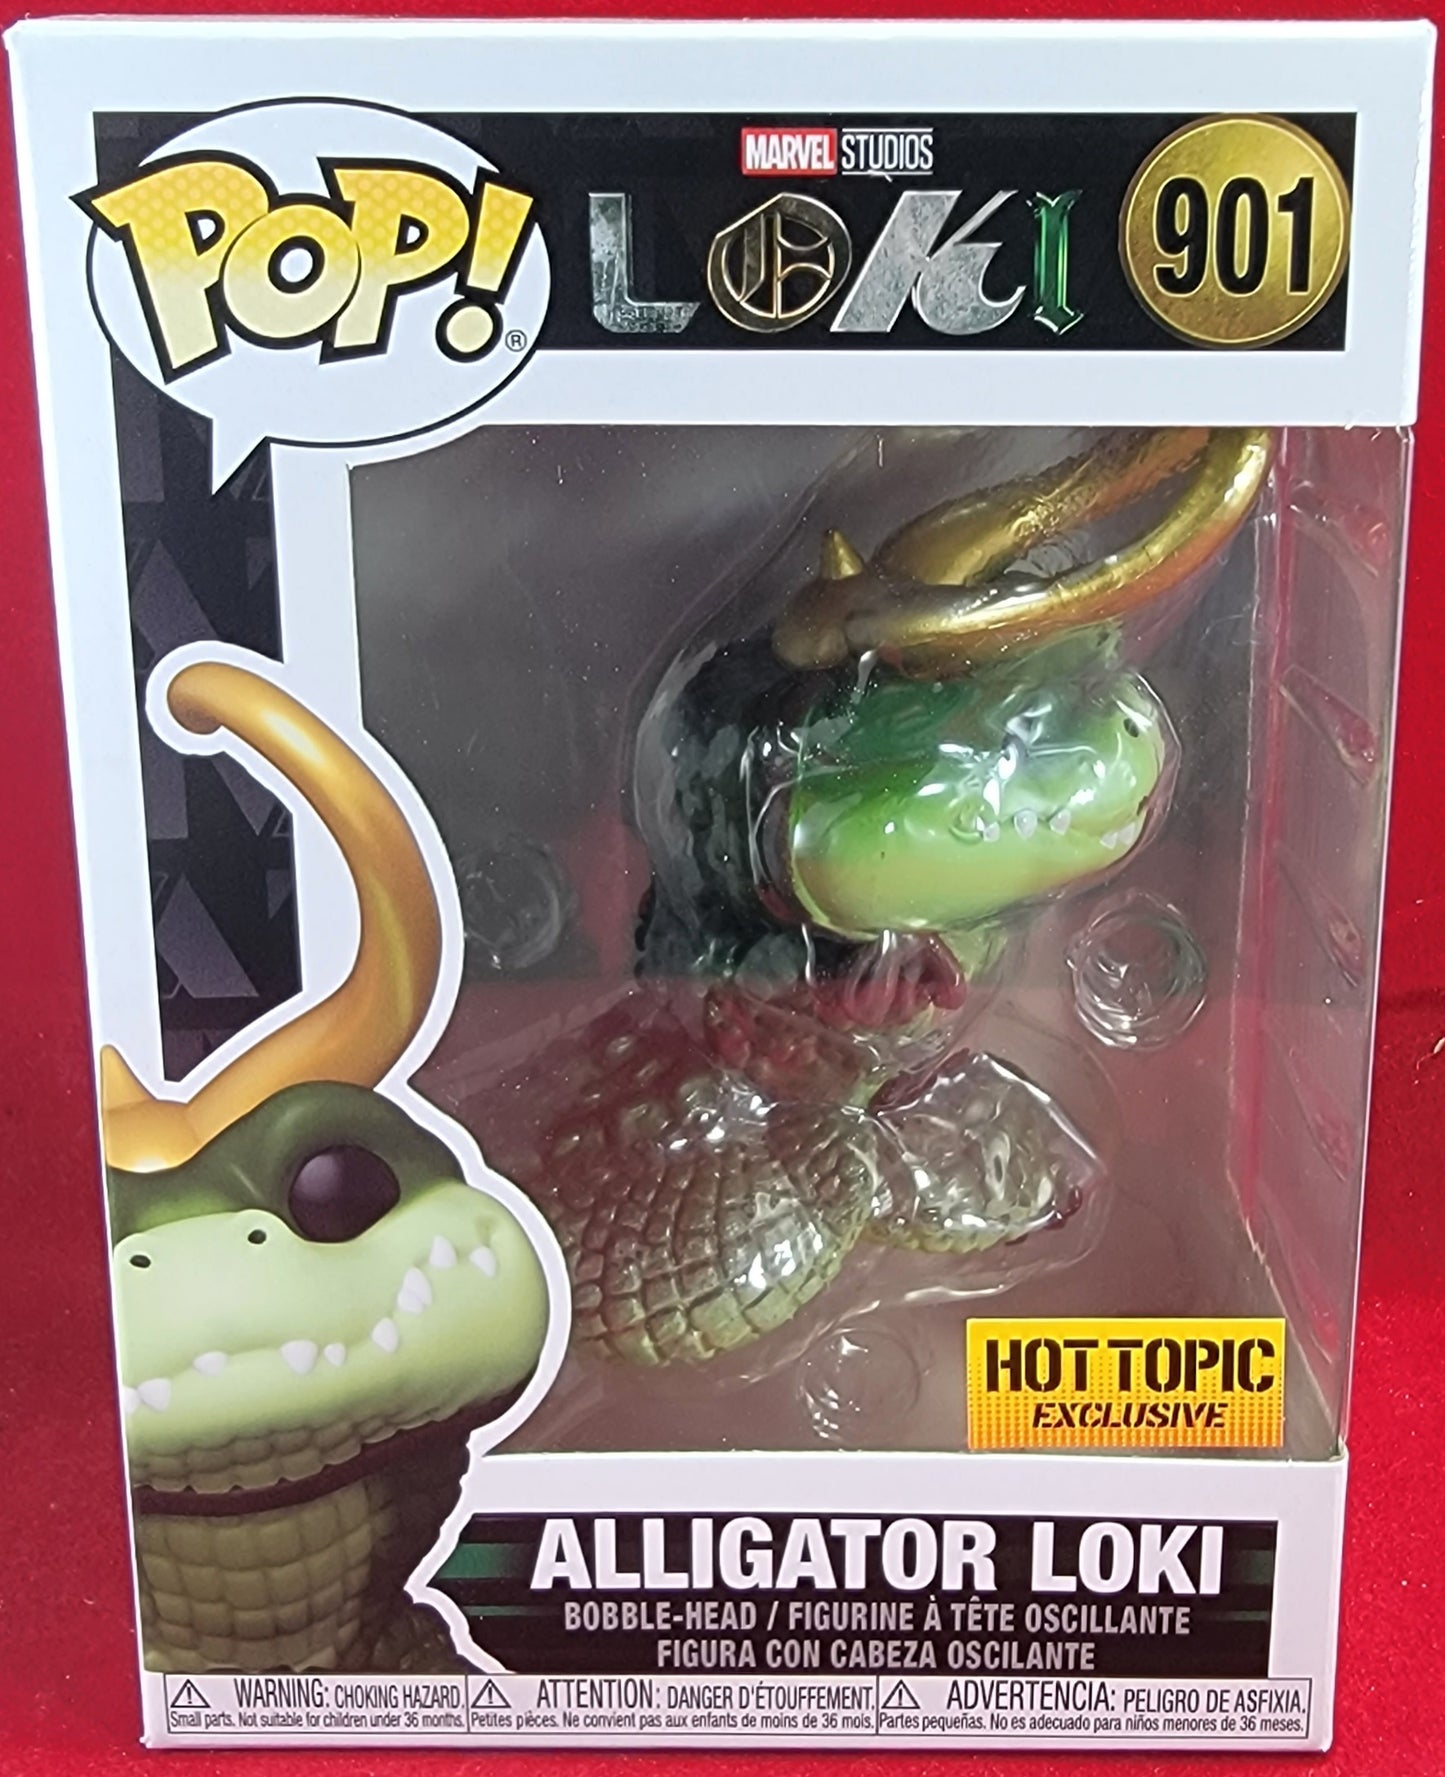 Alligator loki hot topic exclusive funko # 901 (nib)